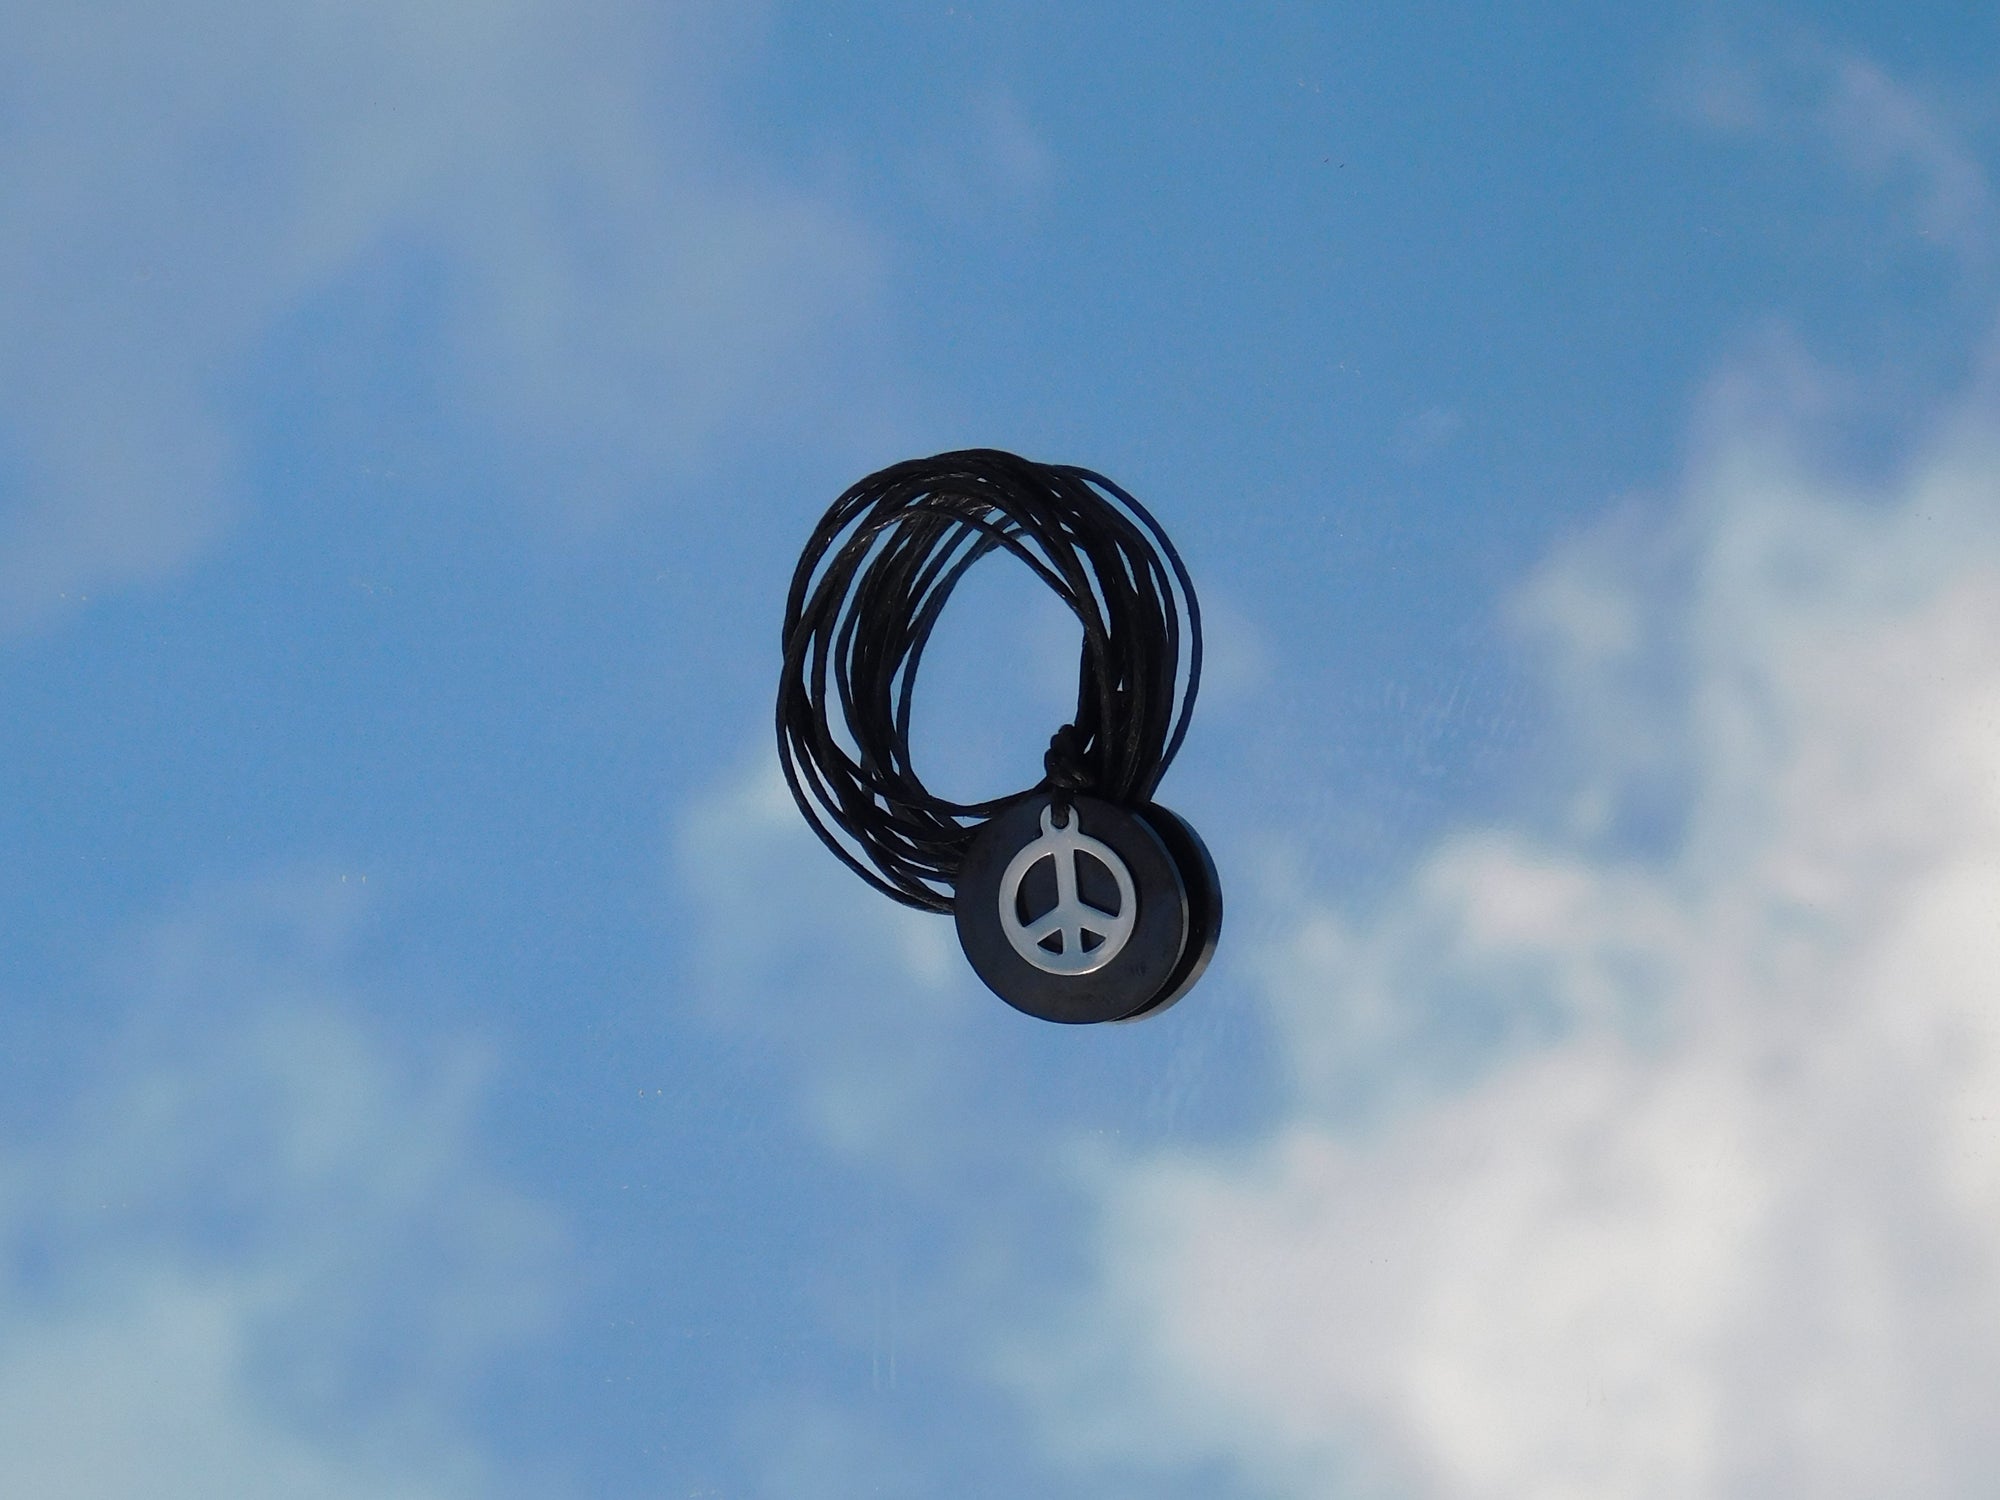 RETIRED - Peace Sign Shungite Necklace & Pendant